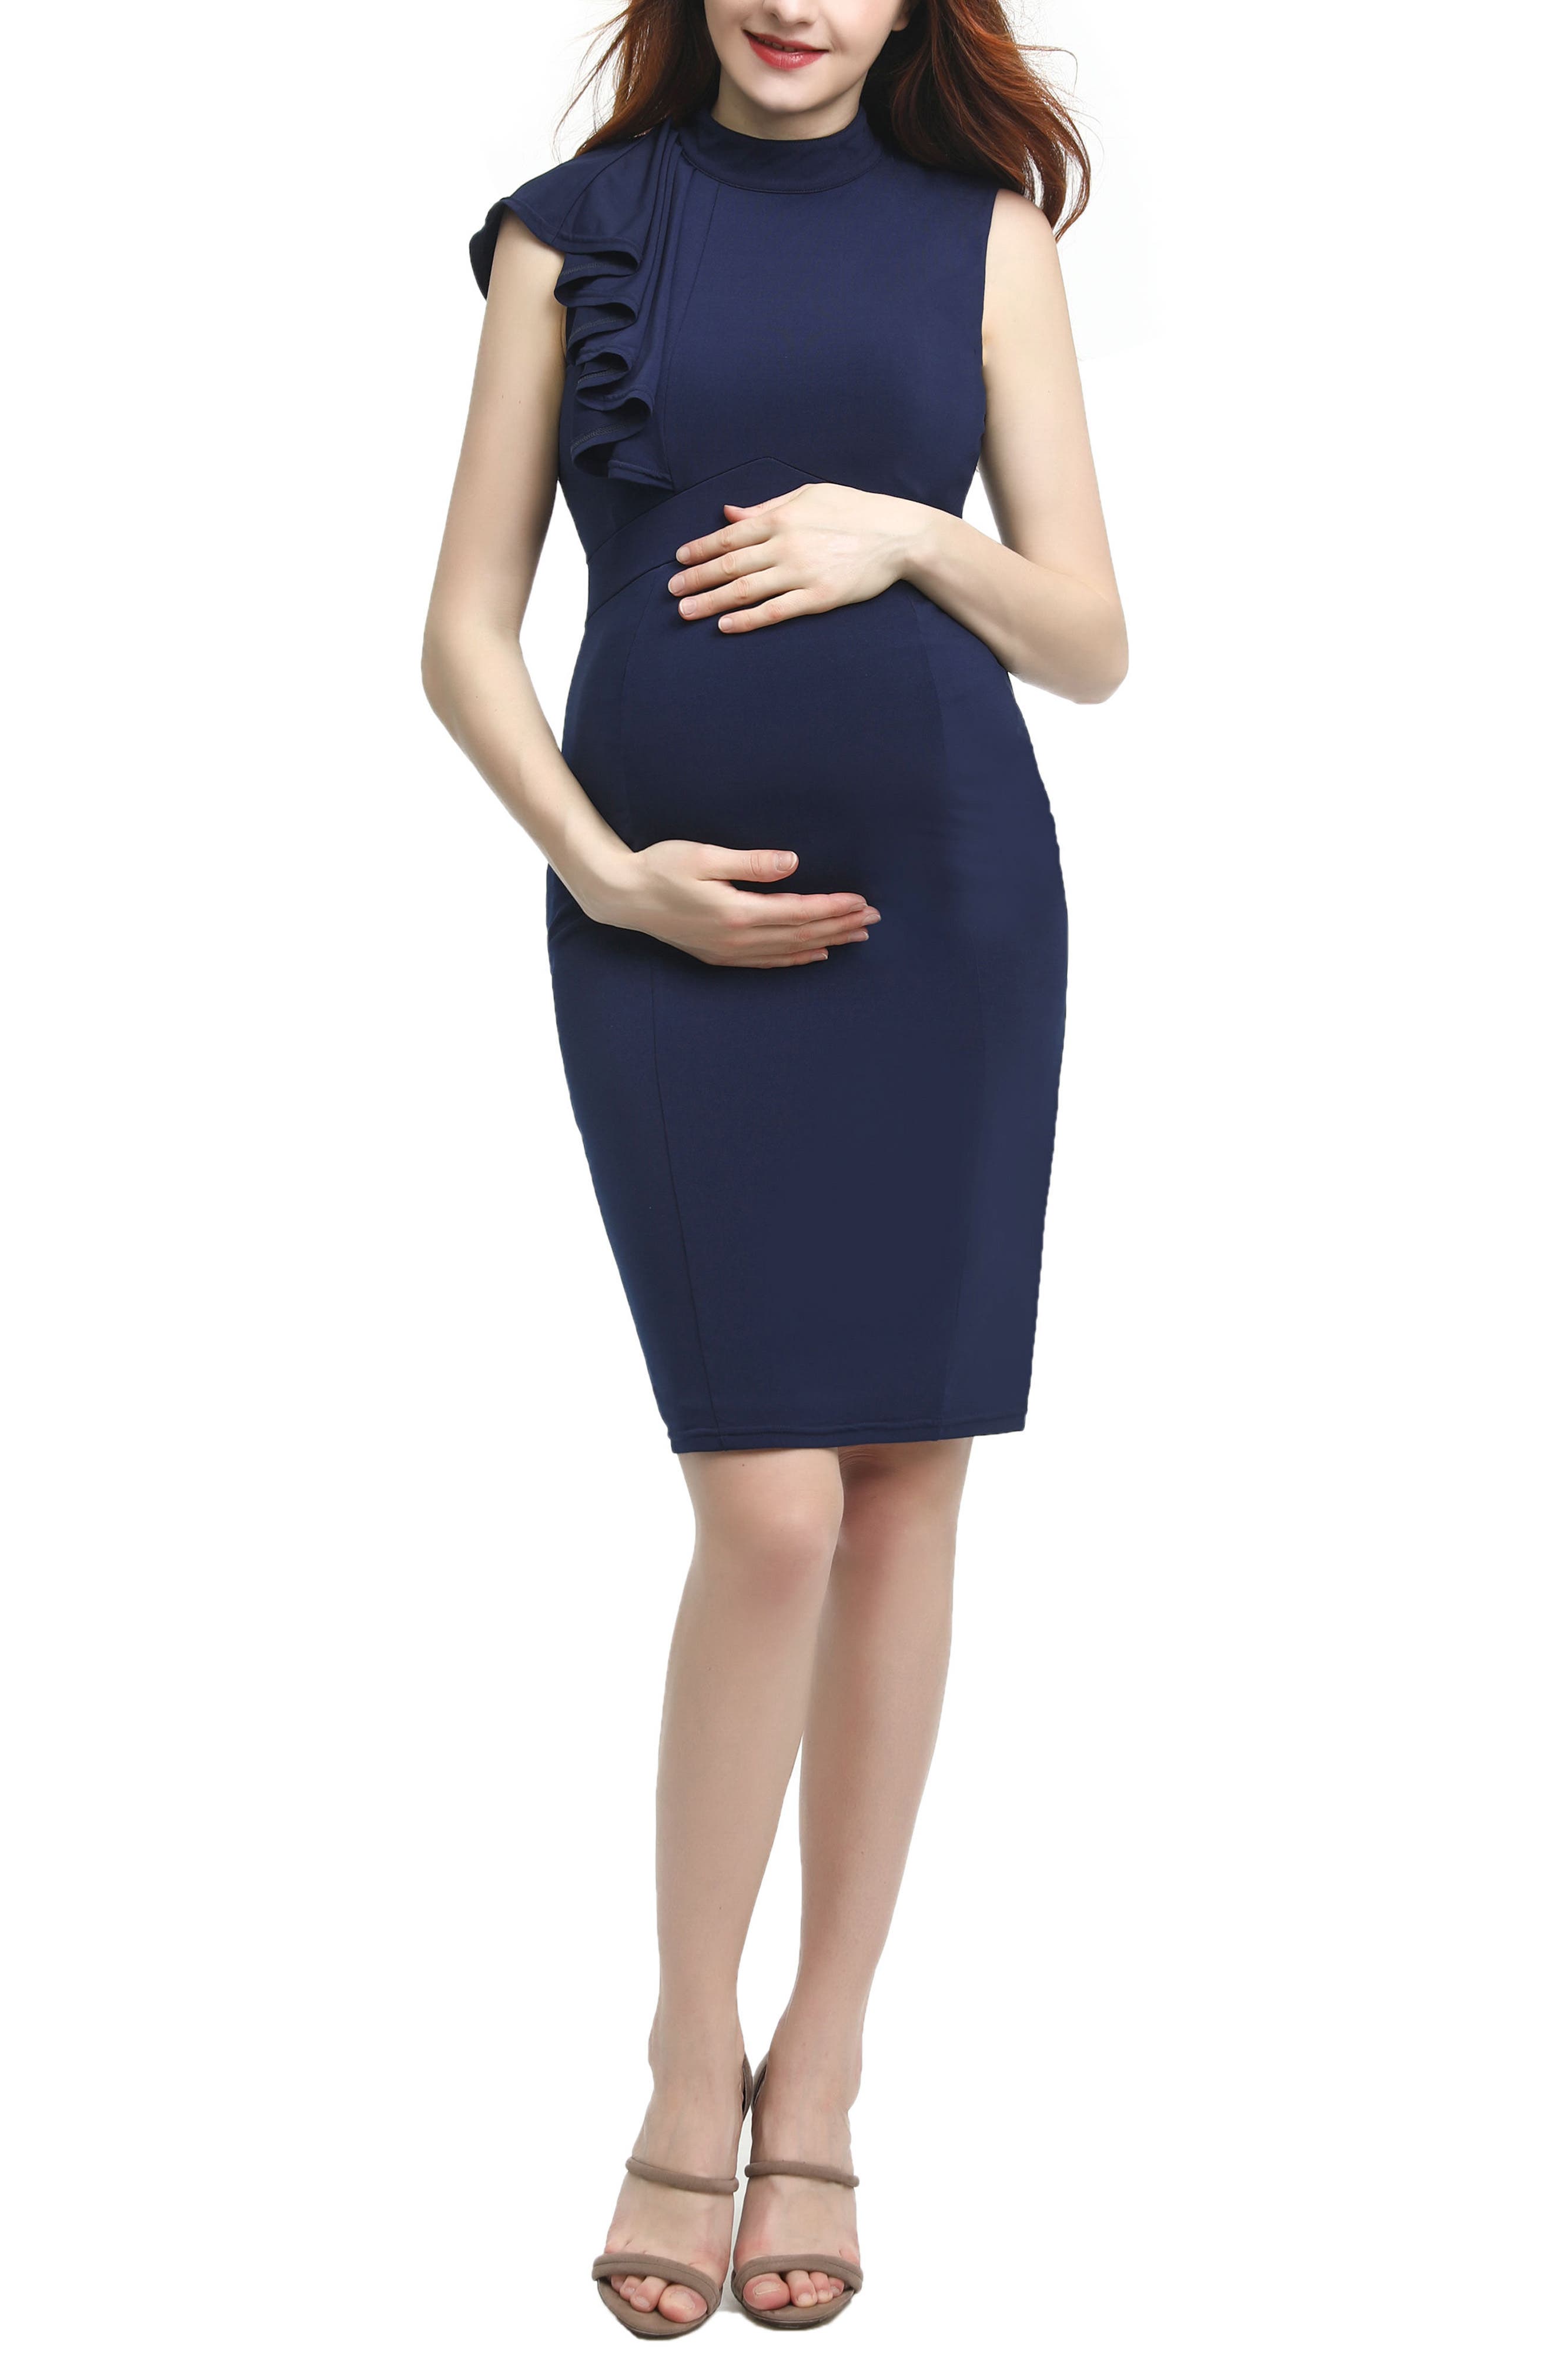 KIM S Womens Maternity Casual Dresses Sleeveless Bodycon Dress 